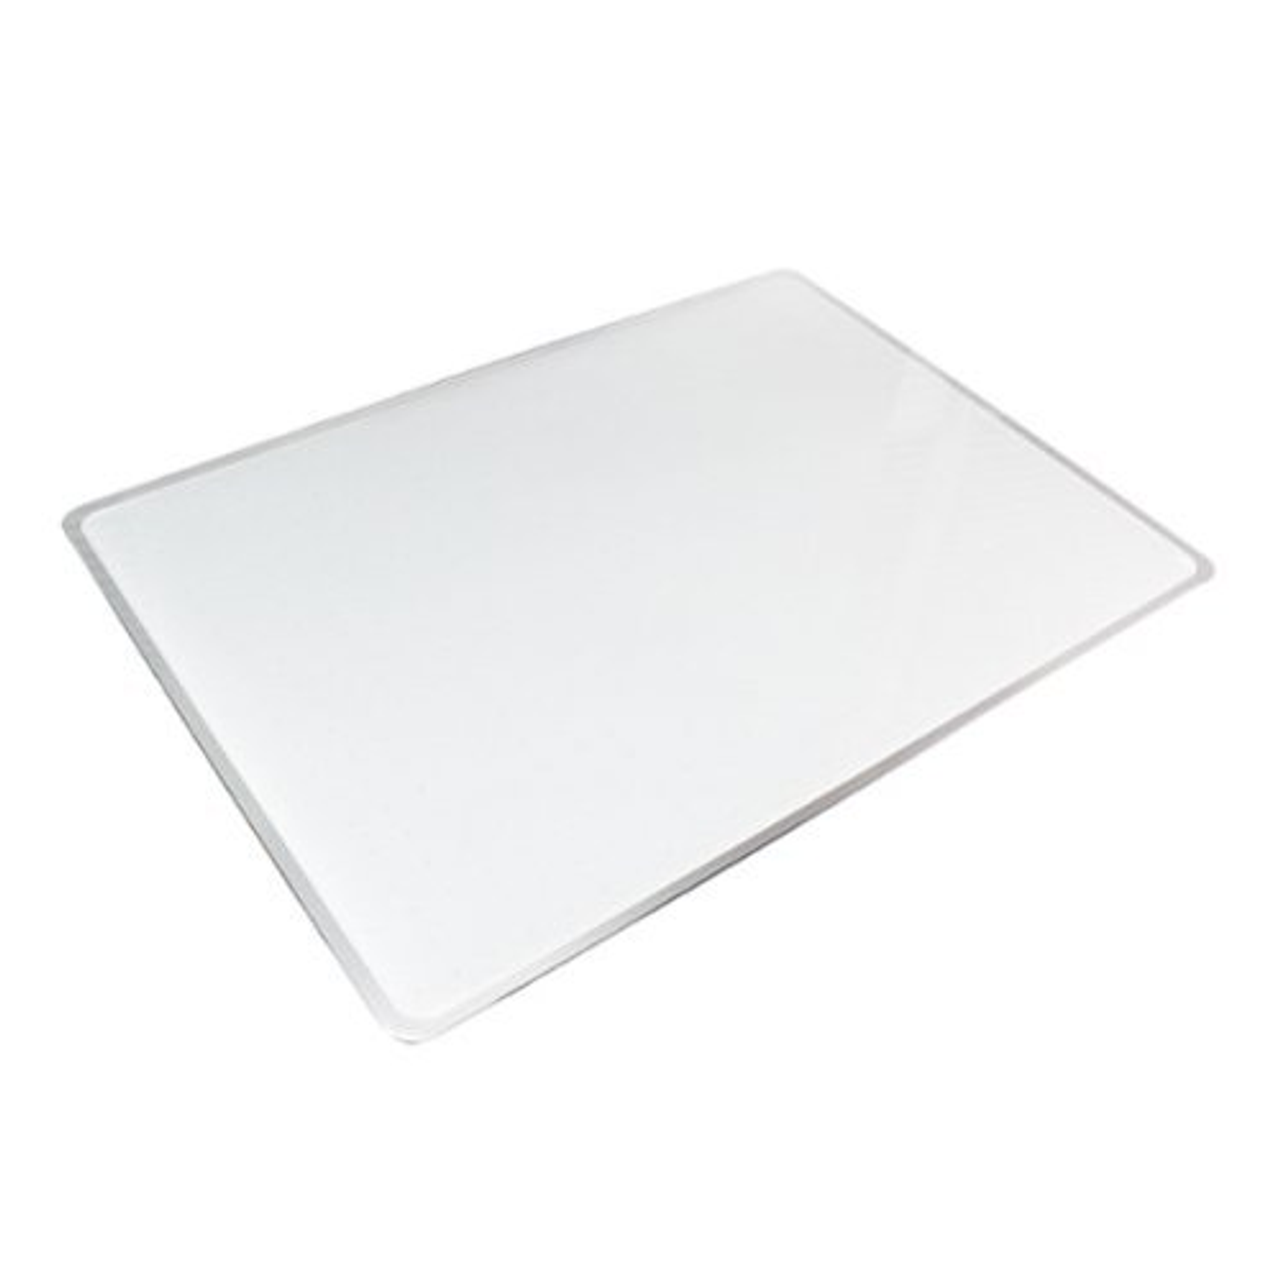 Floortex Glass Magnetic Grid Board 17" x 23" in White - White